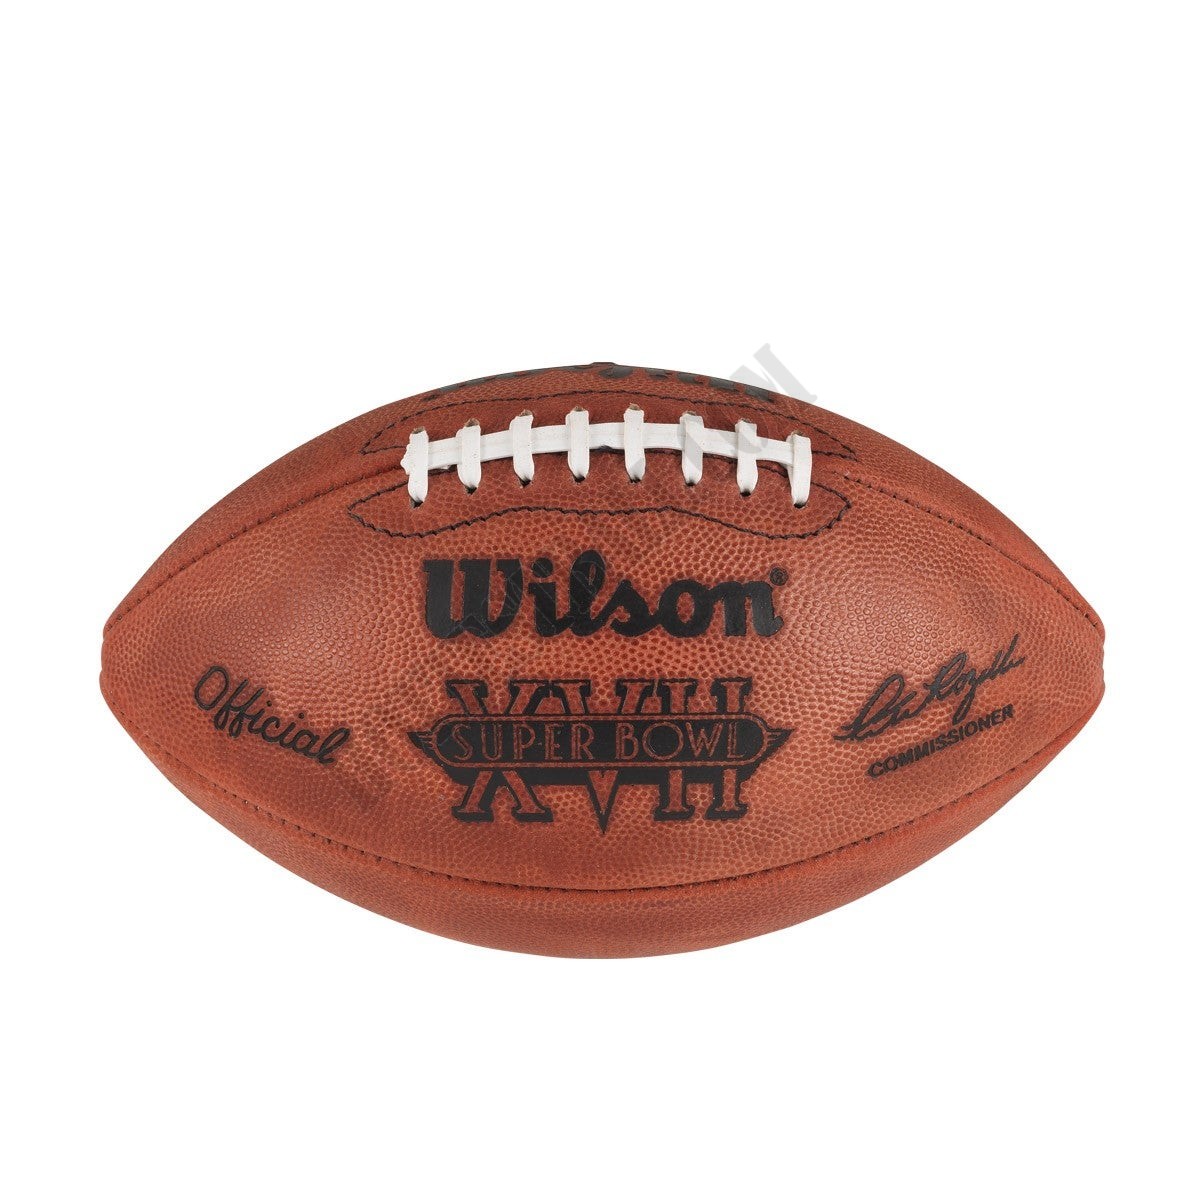 Super Bowl XVII Game Football - Washington ● Wilson Promotions - -0